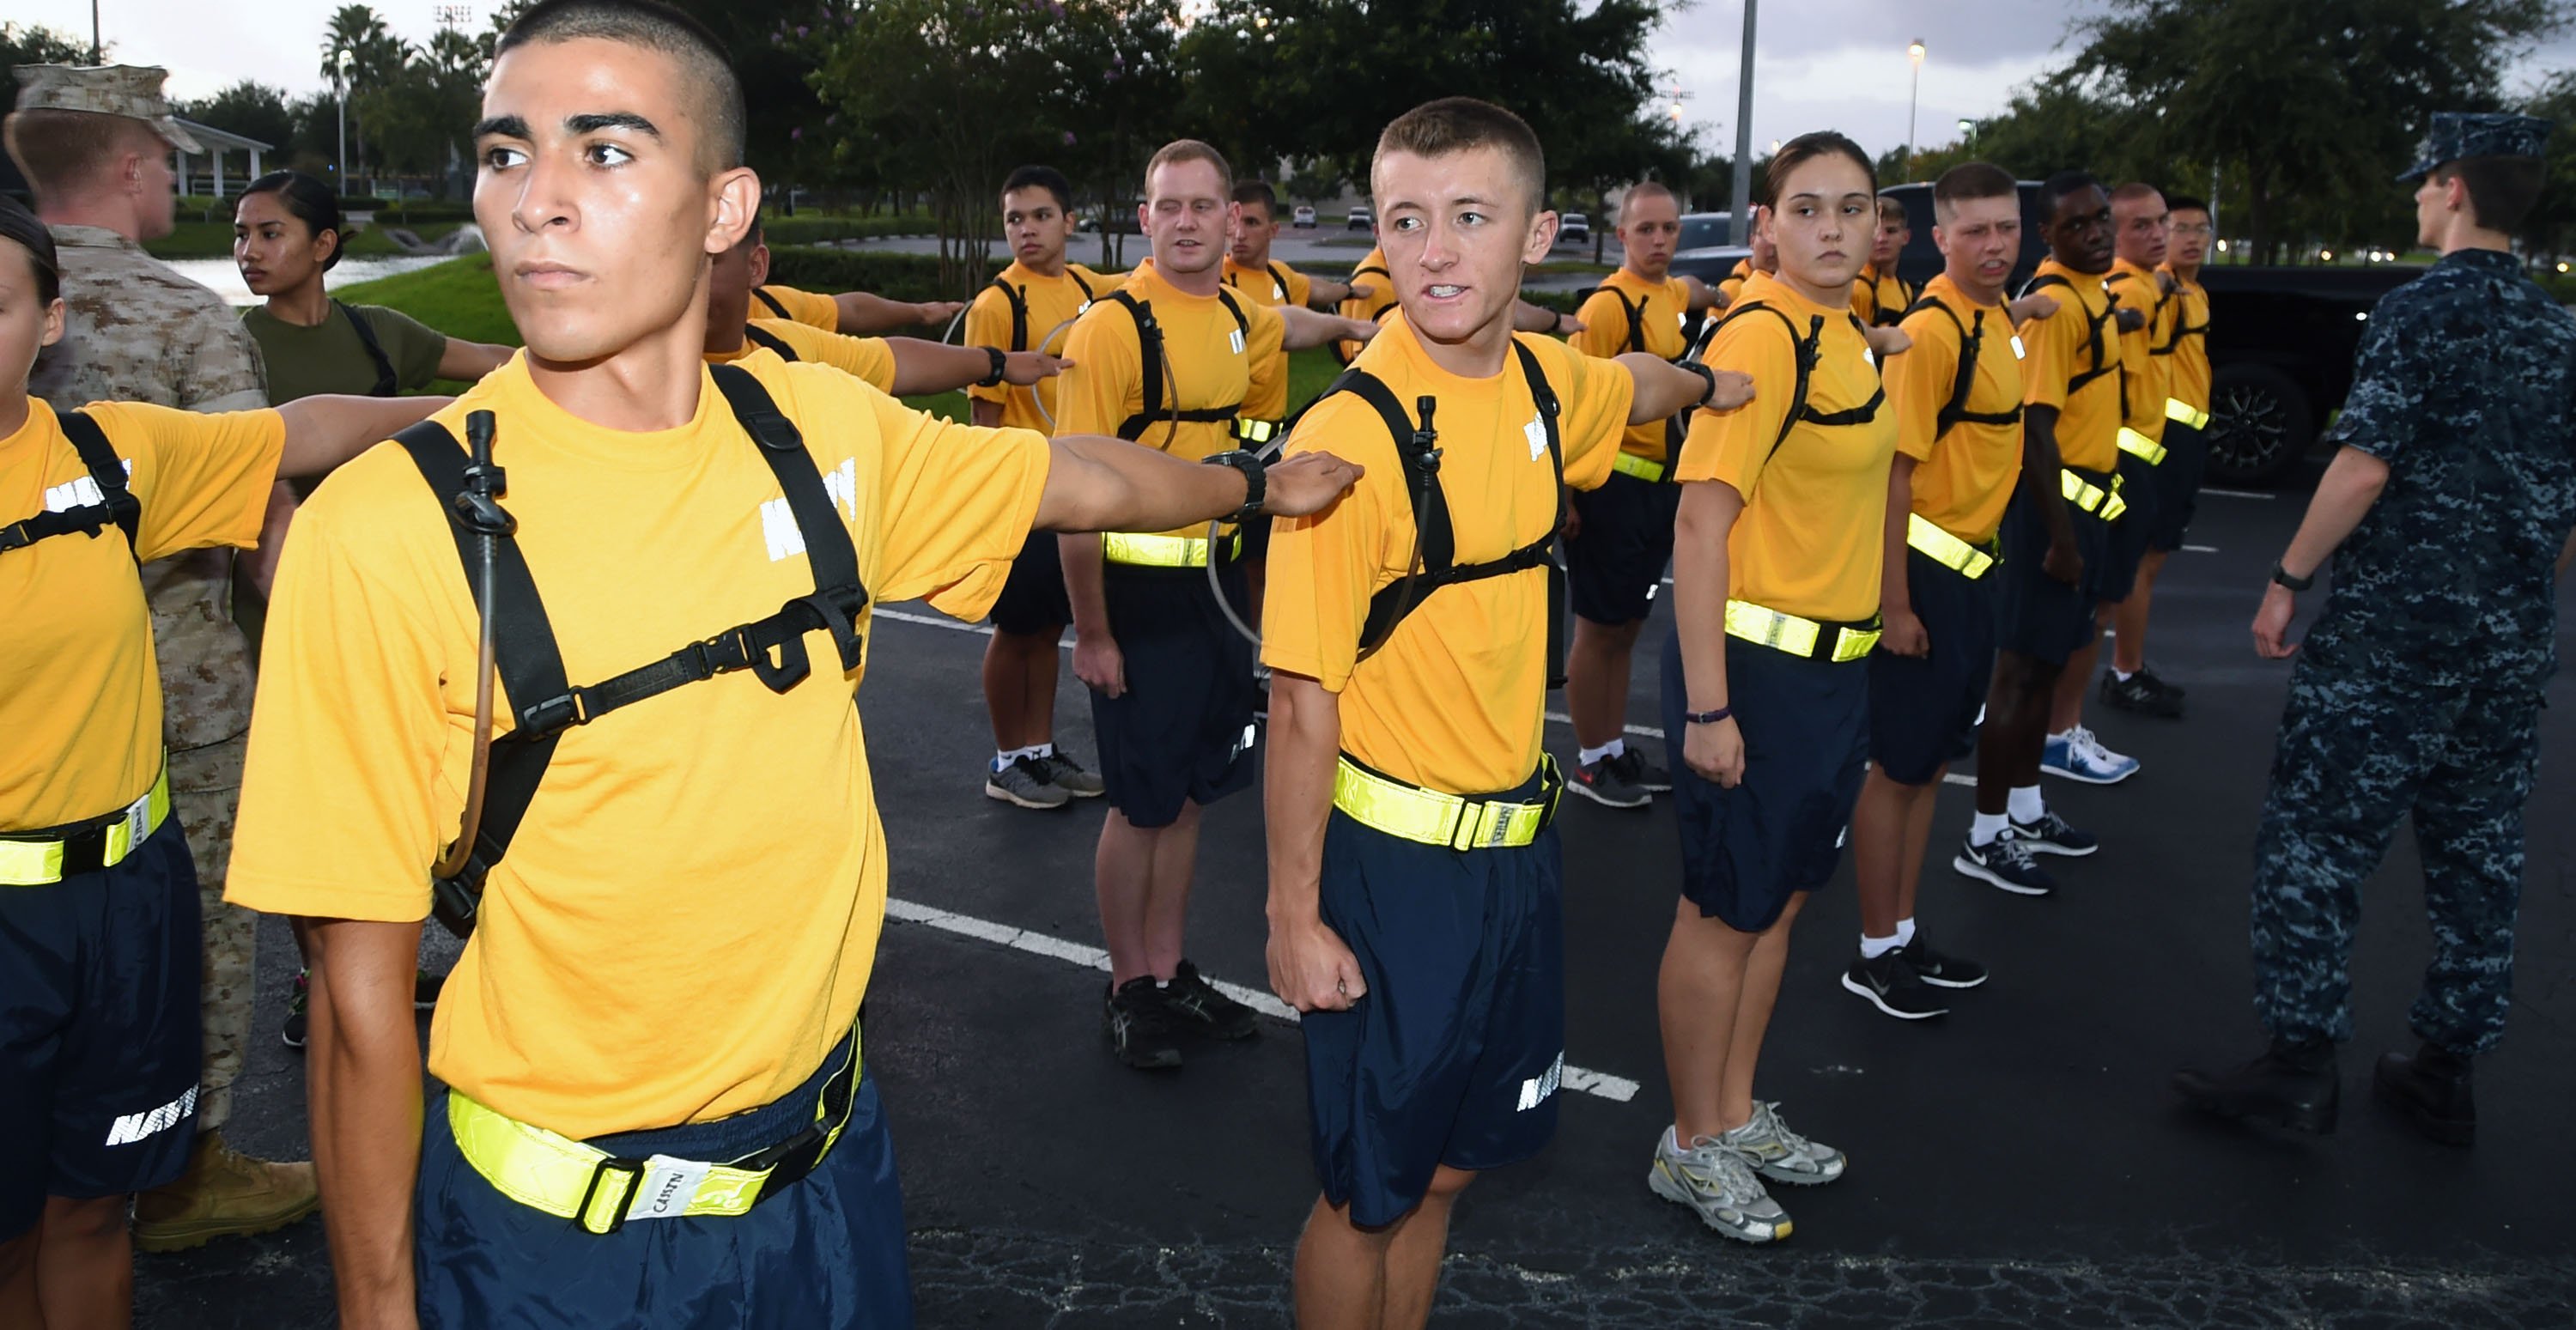 Naval ROTC incoming midshipmen freshmen perform a facing movement during NROTC freshman orientation at Embry-Riddle Aeronautical University on Aug. 15, 2014. US Navy Photo